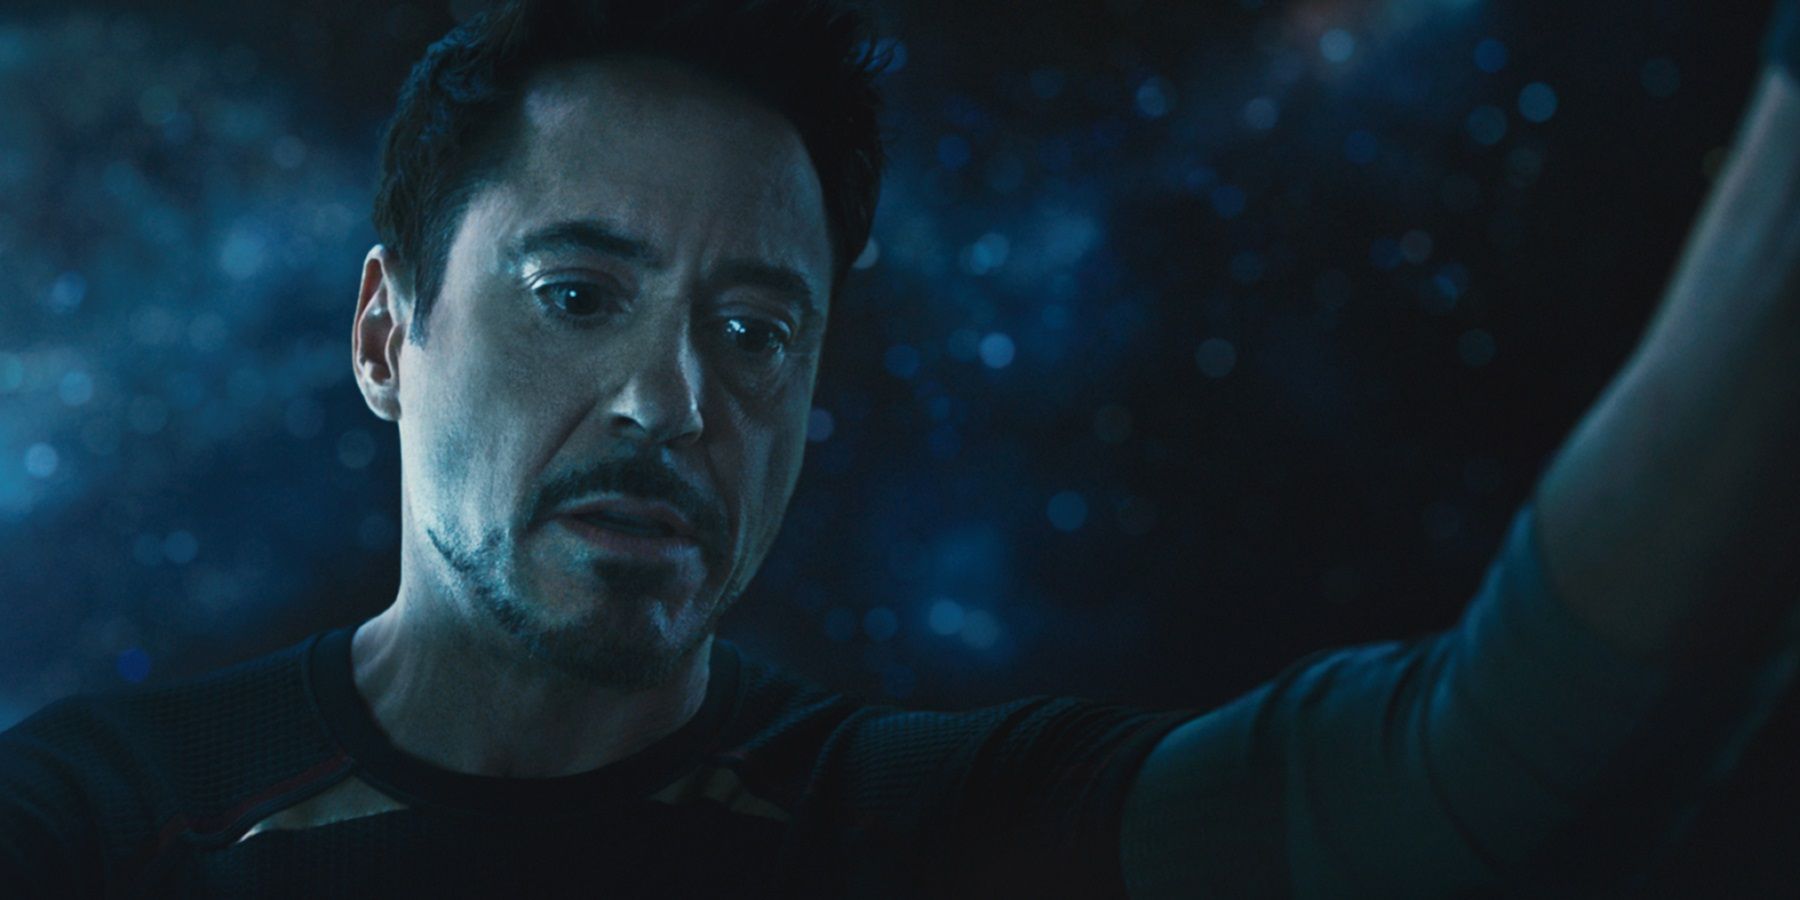 Tony Stark's vision as he looks heartbroken in Age of Ultron